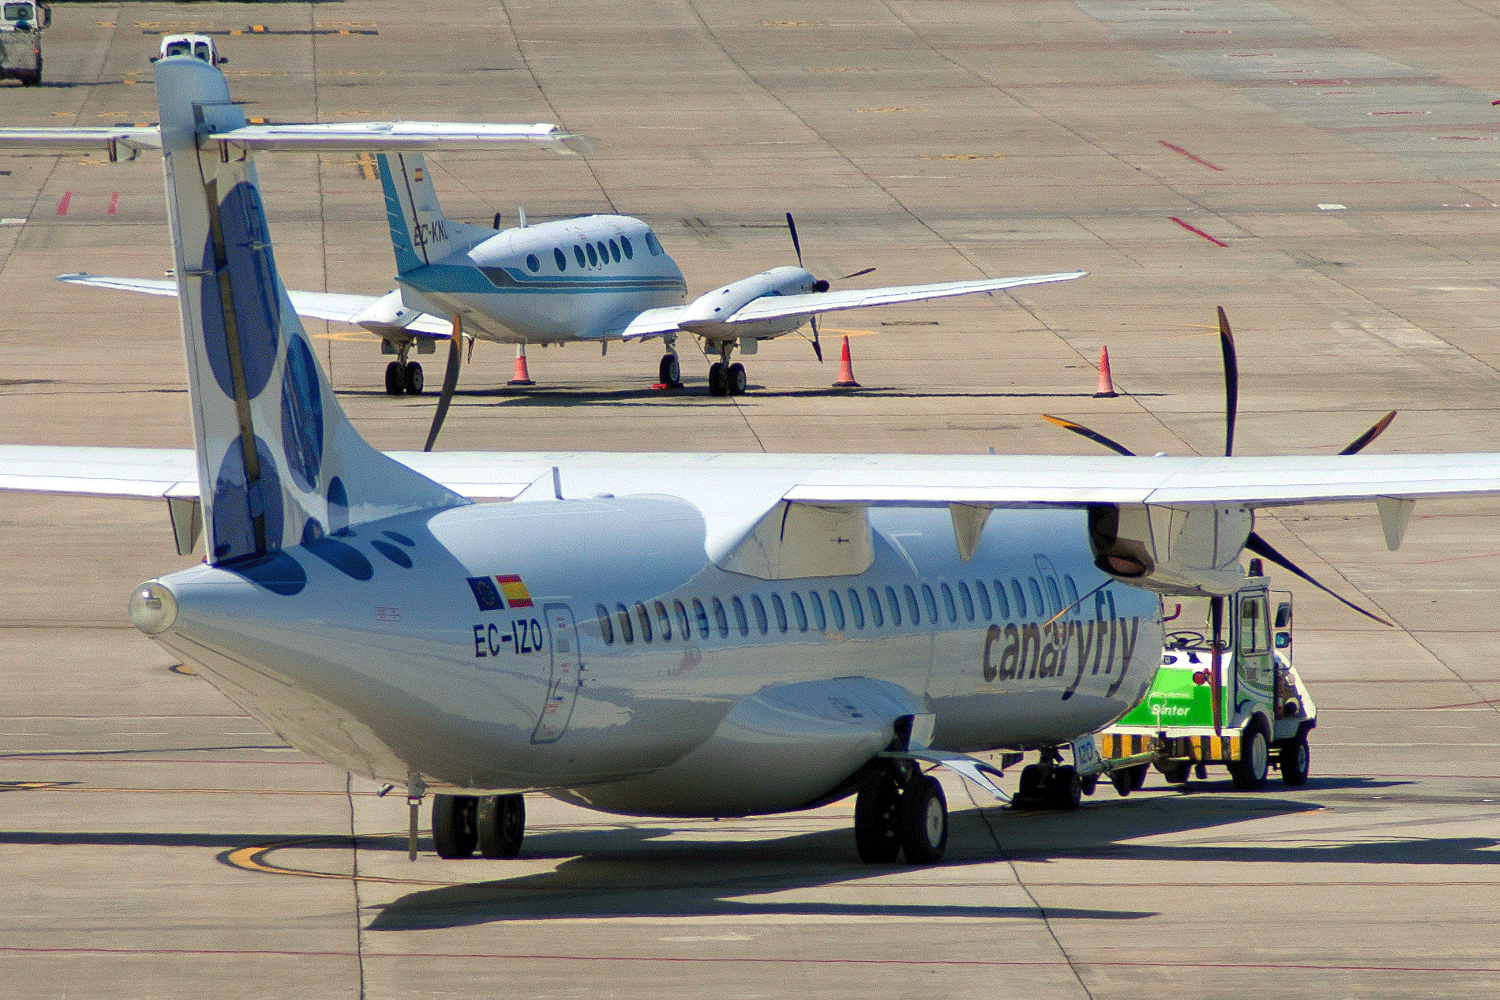 EC-IZO ATR 72 212A CanaryFly